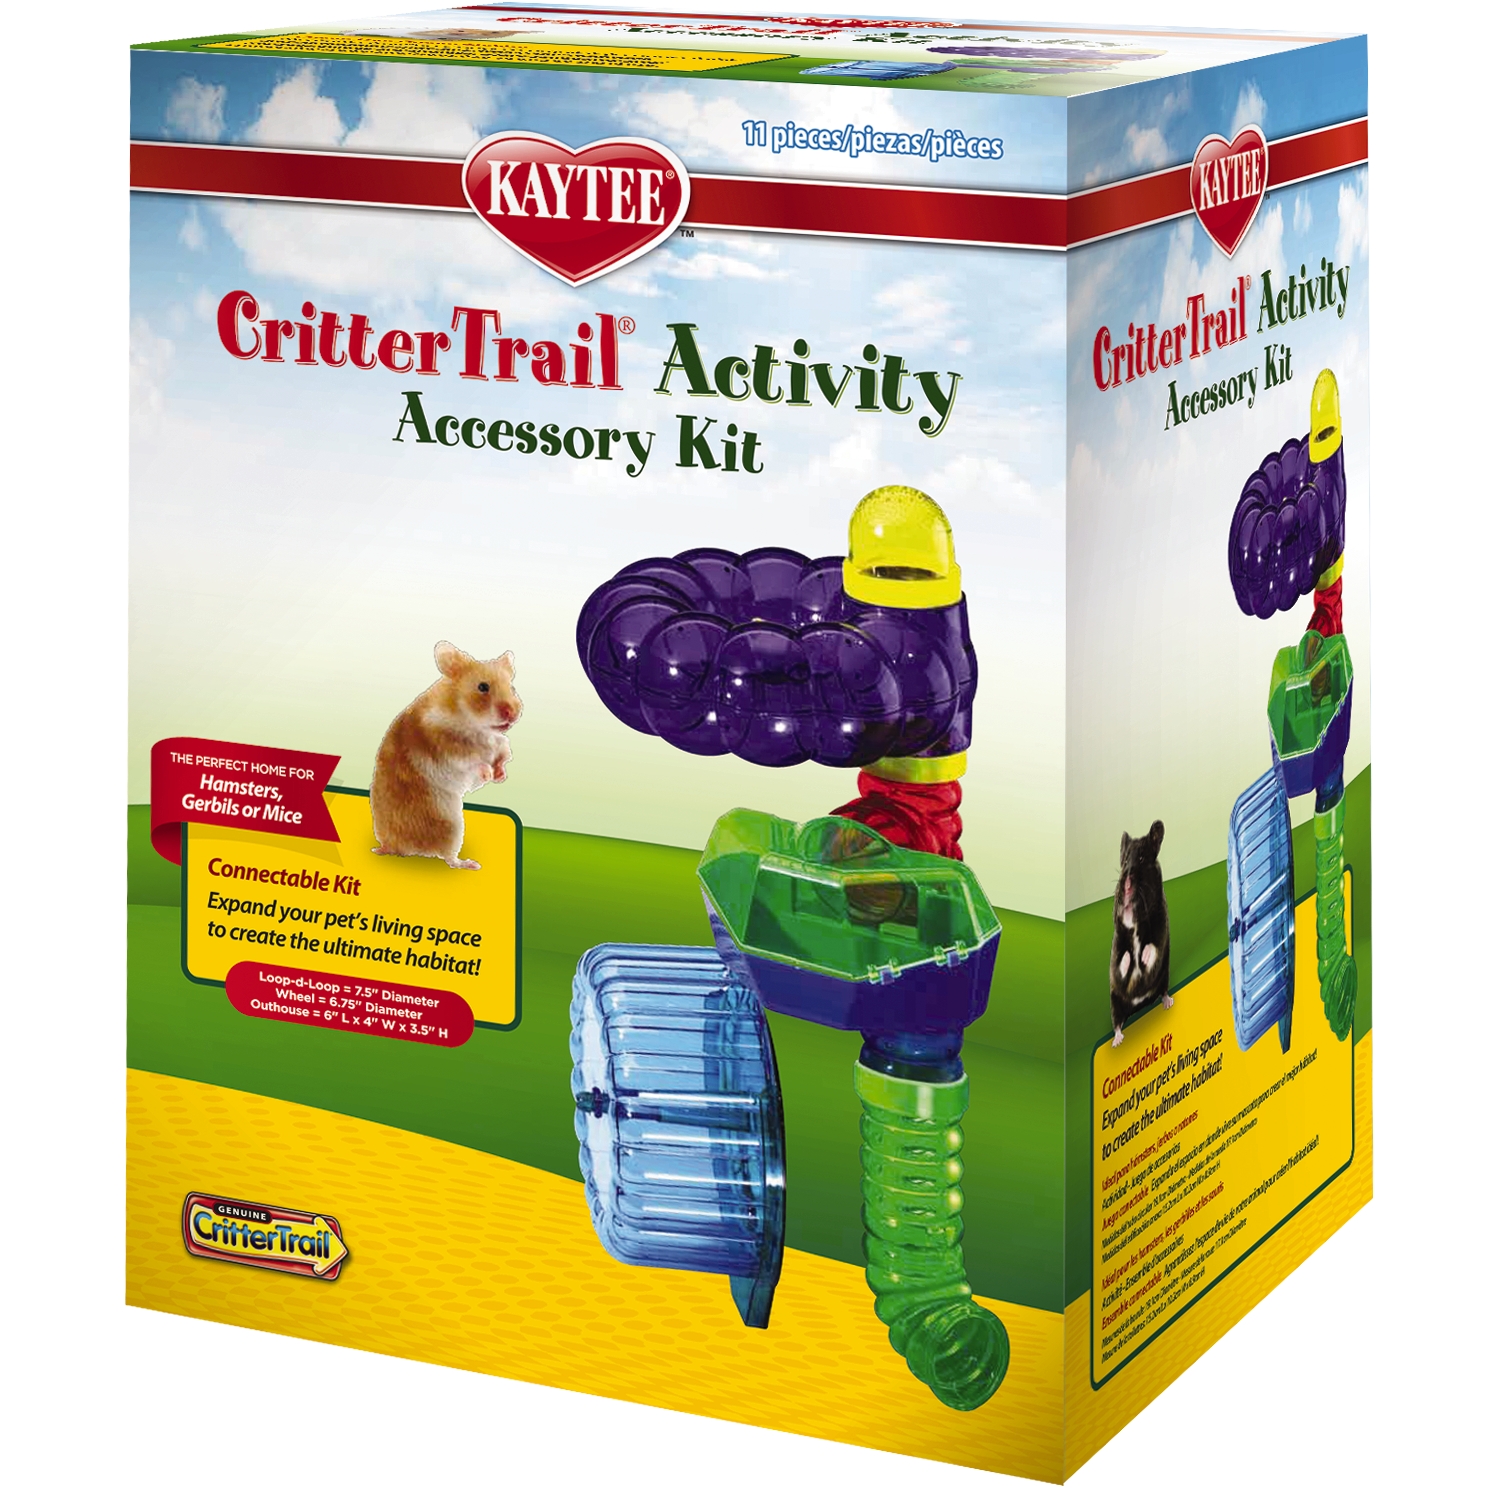 CritterTrail Activity Accessory Kit